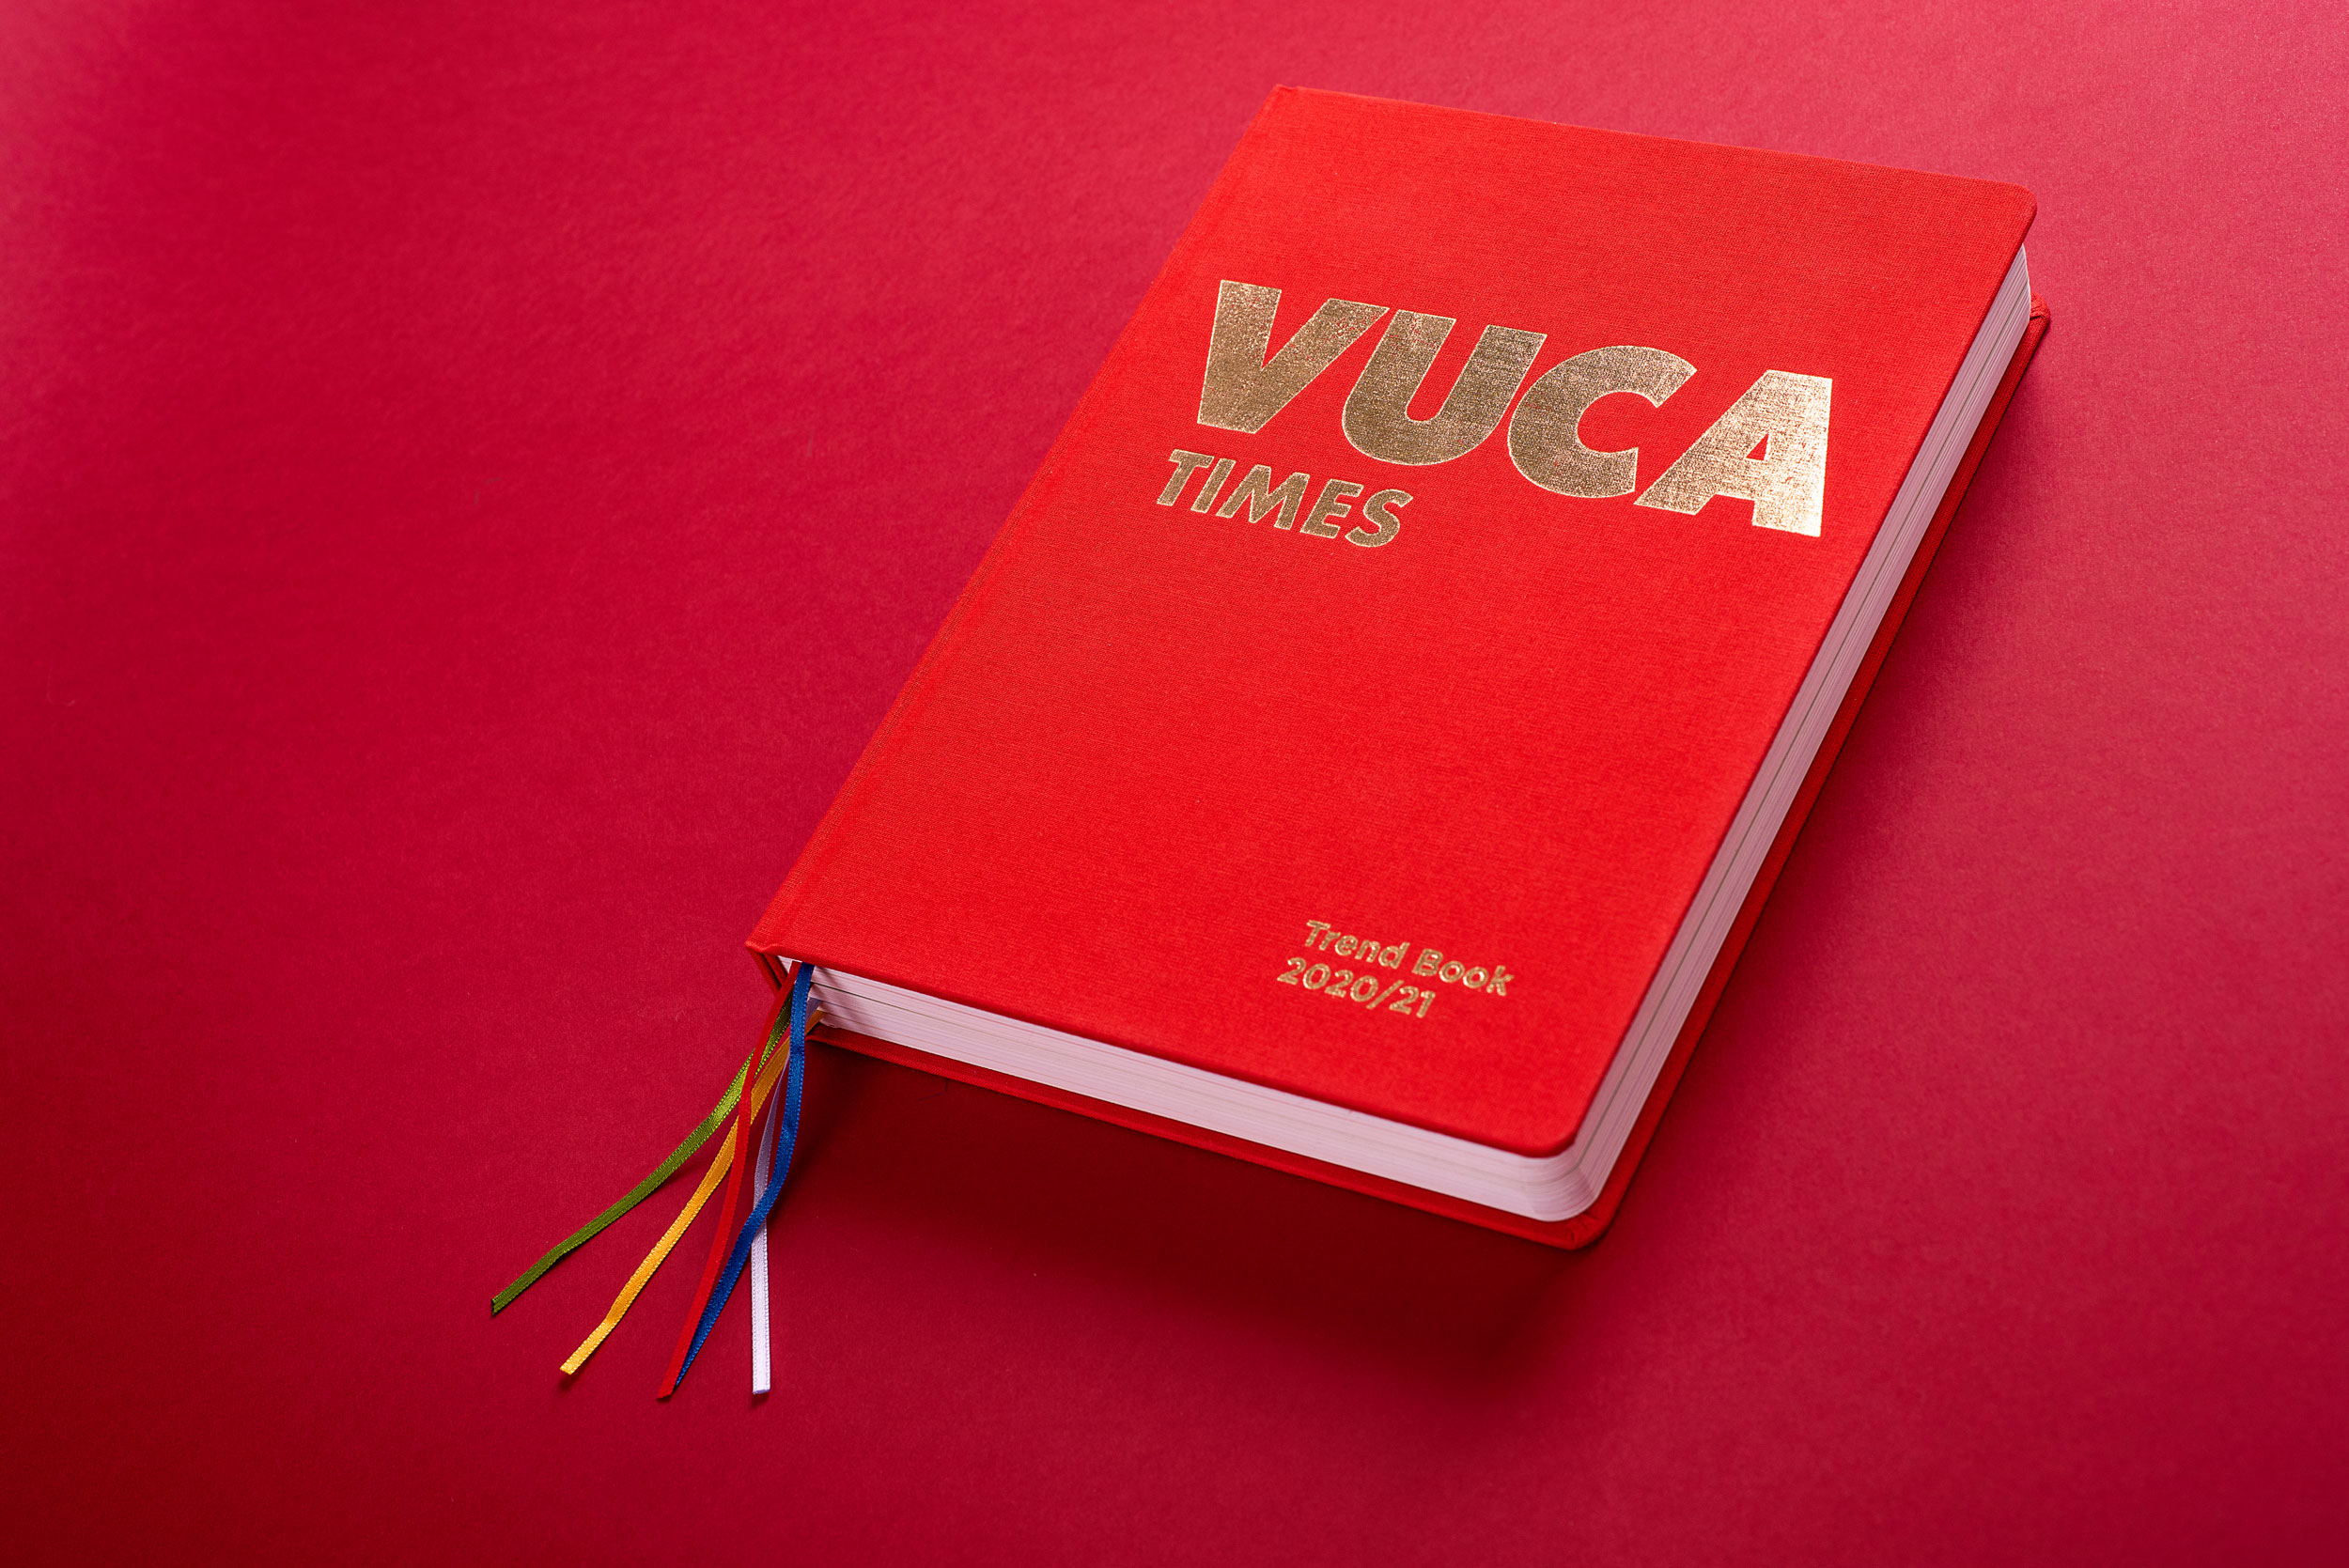 Vuca Times Trend Book